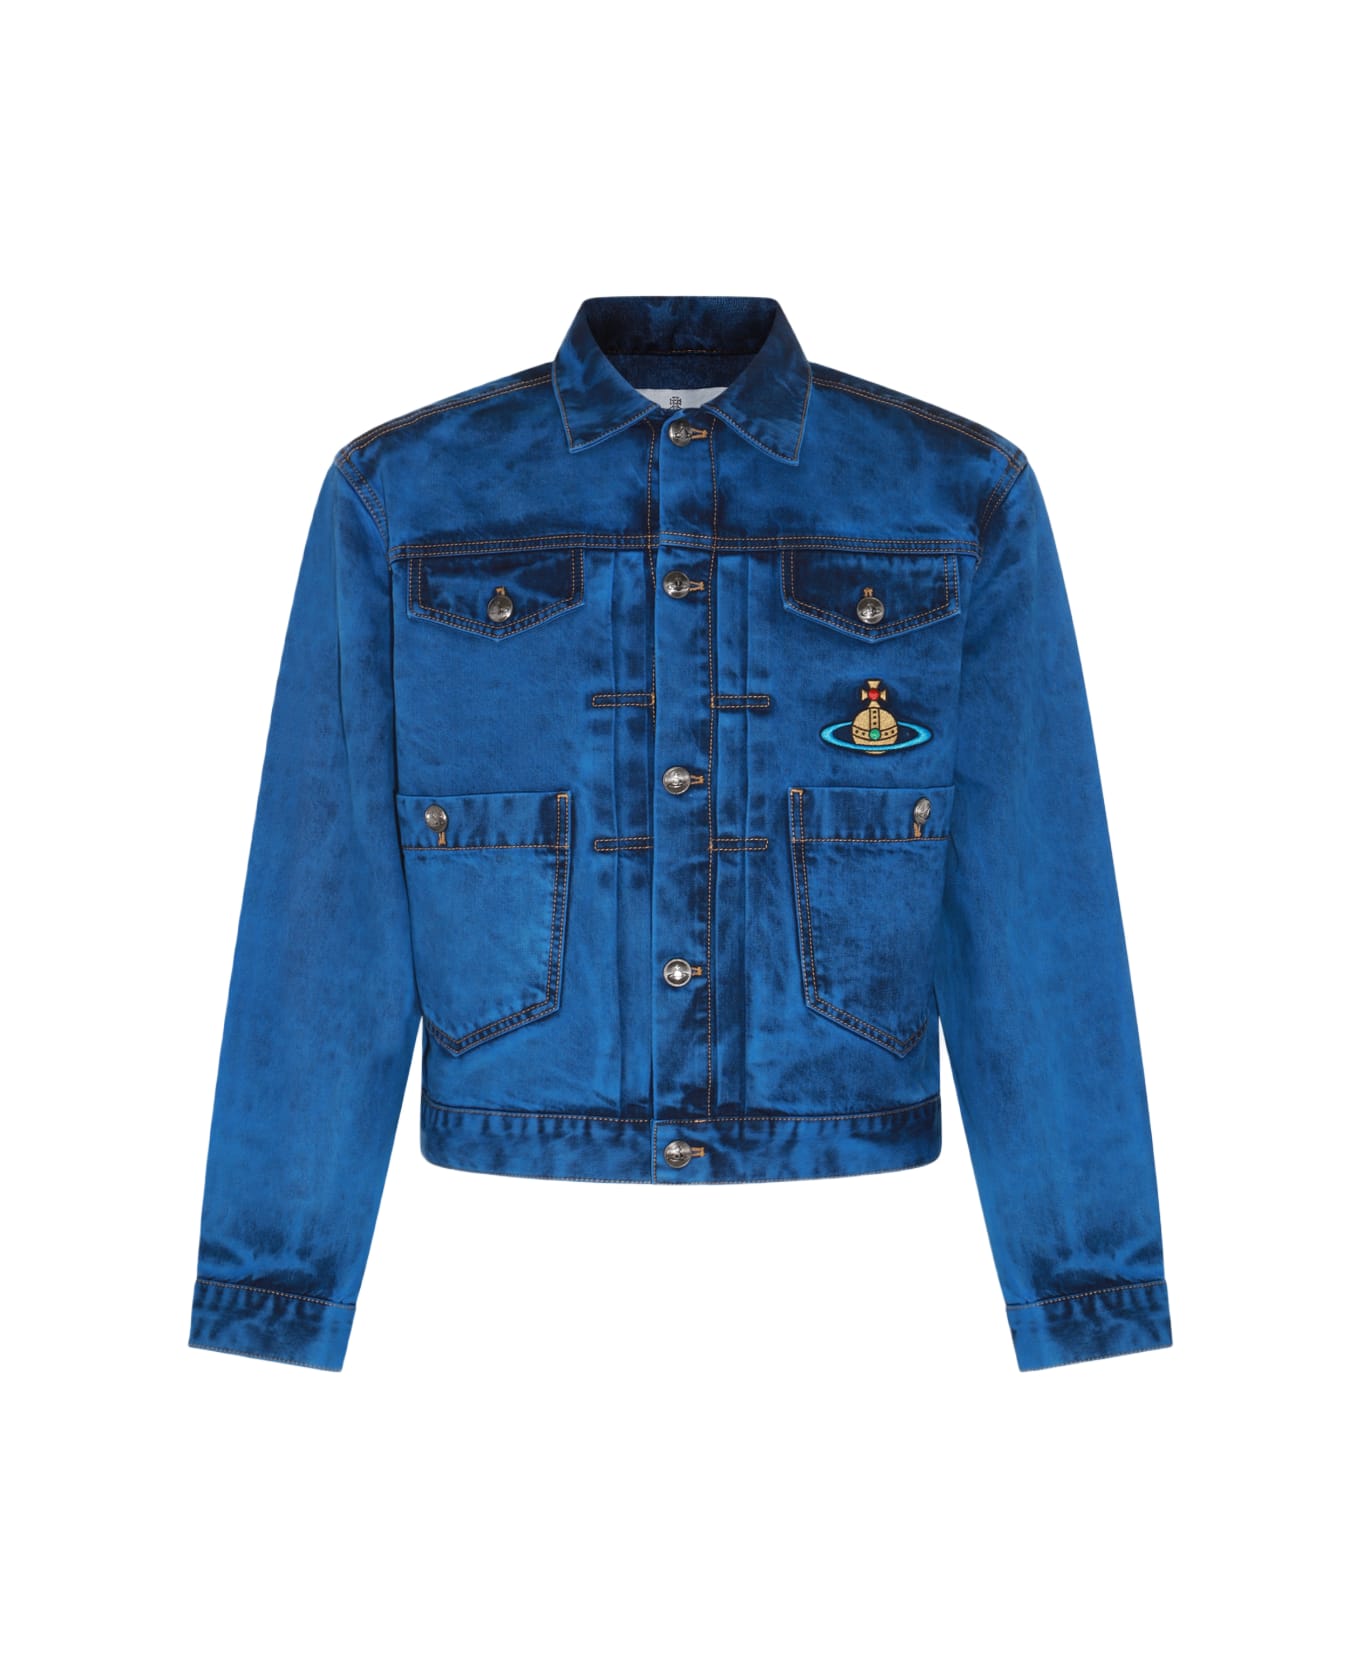 Vivienne Westwood Blue Cotton Blend Denim Jacket - Blue